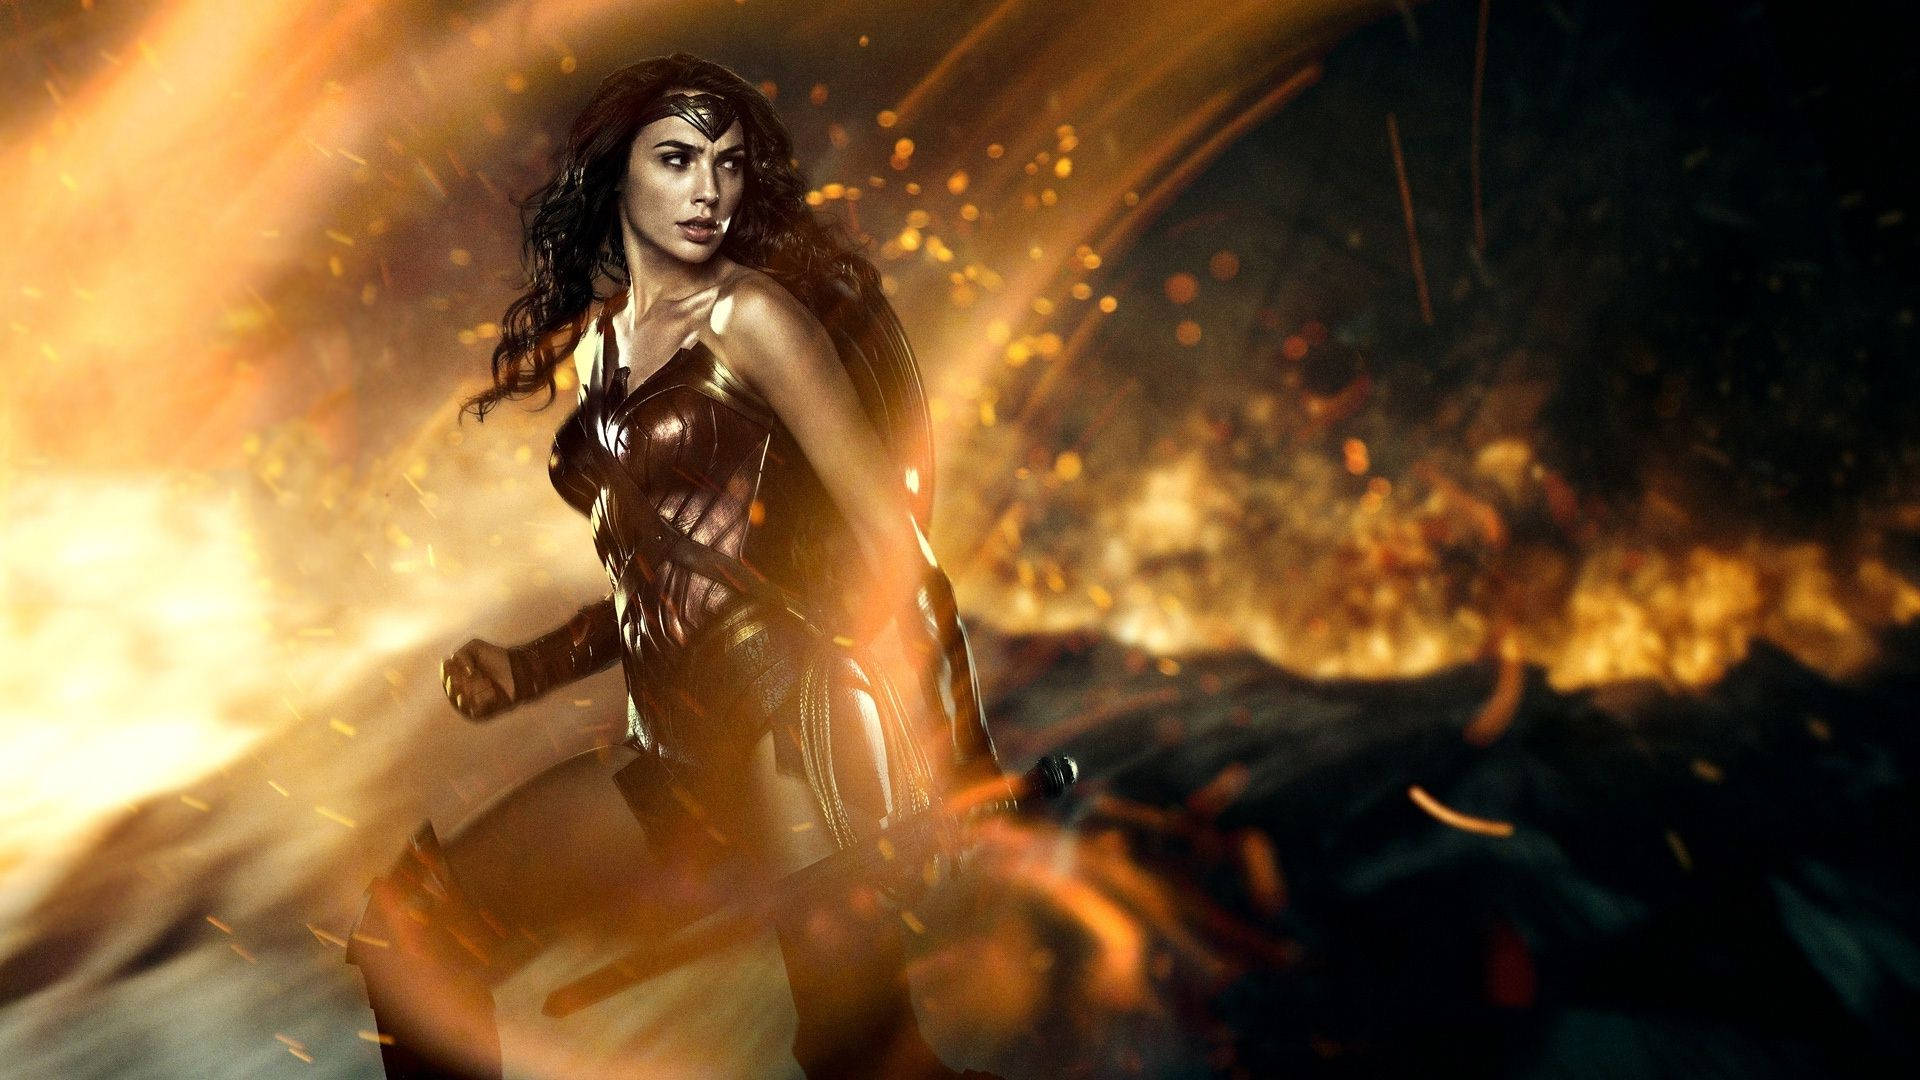 Download Wonder Woman Blazing Fire Wallpaper 